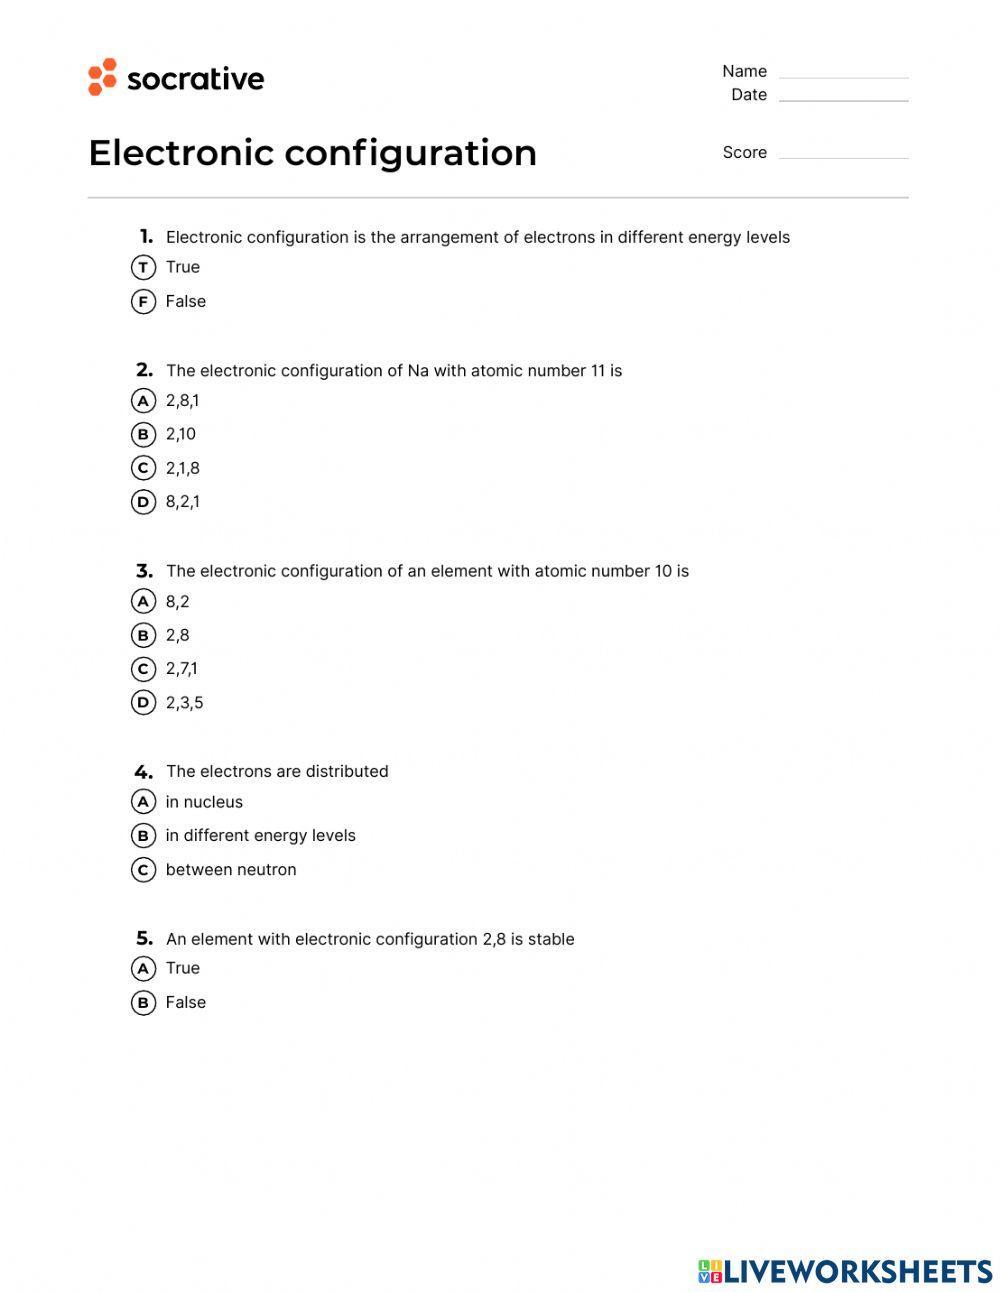 Electron configuration